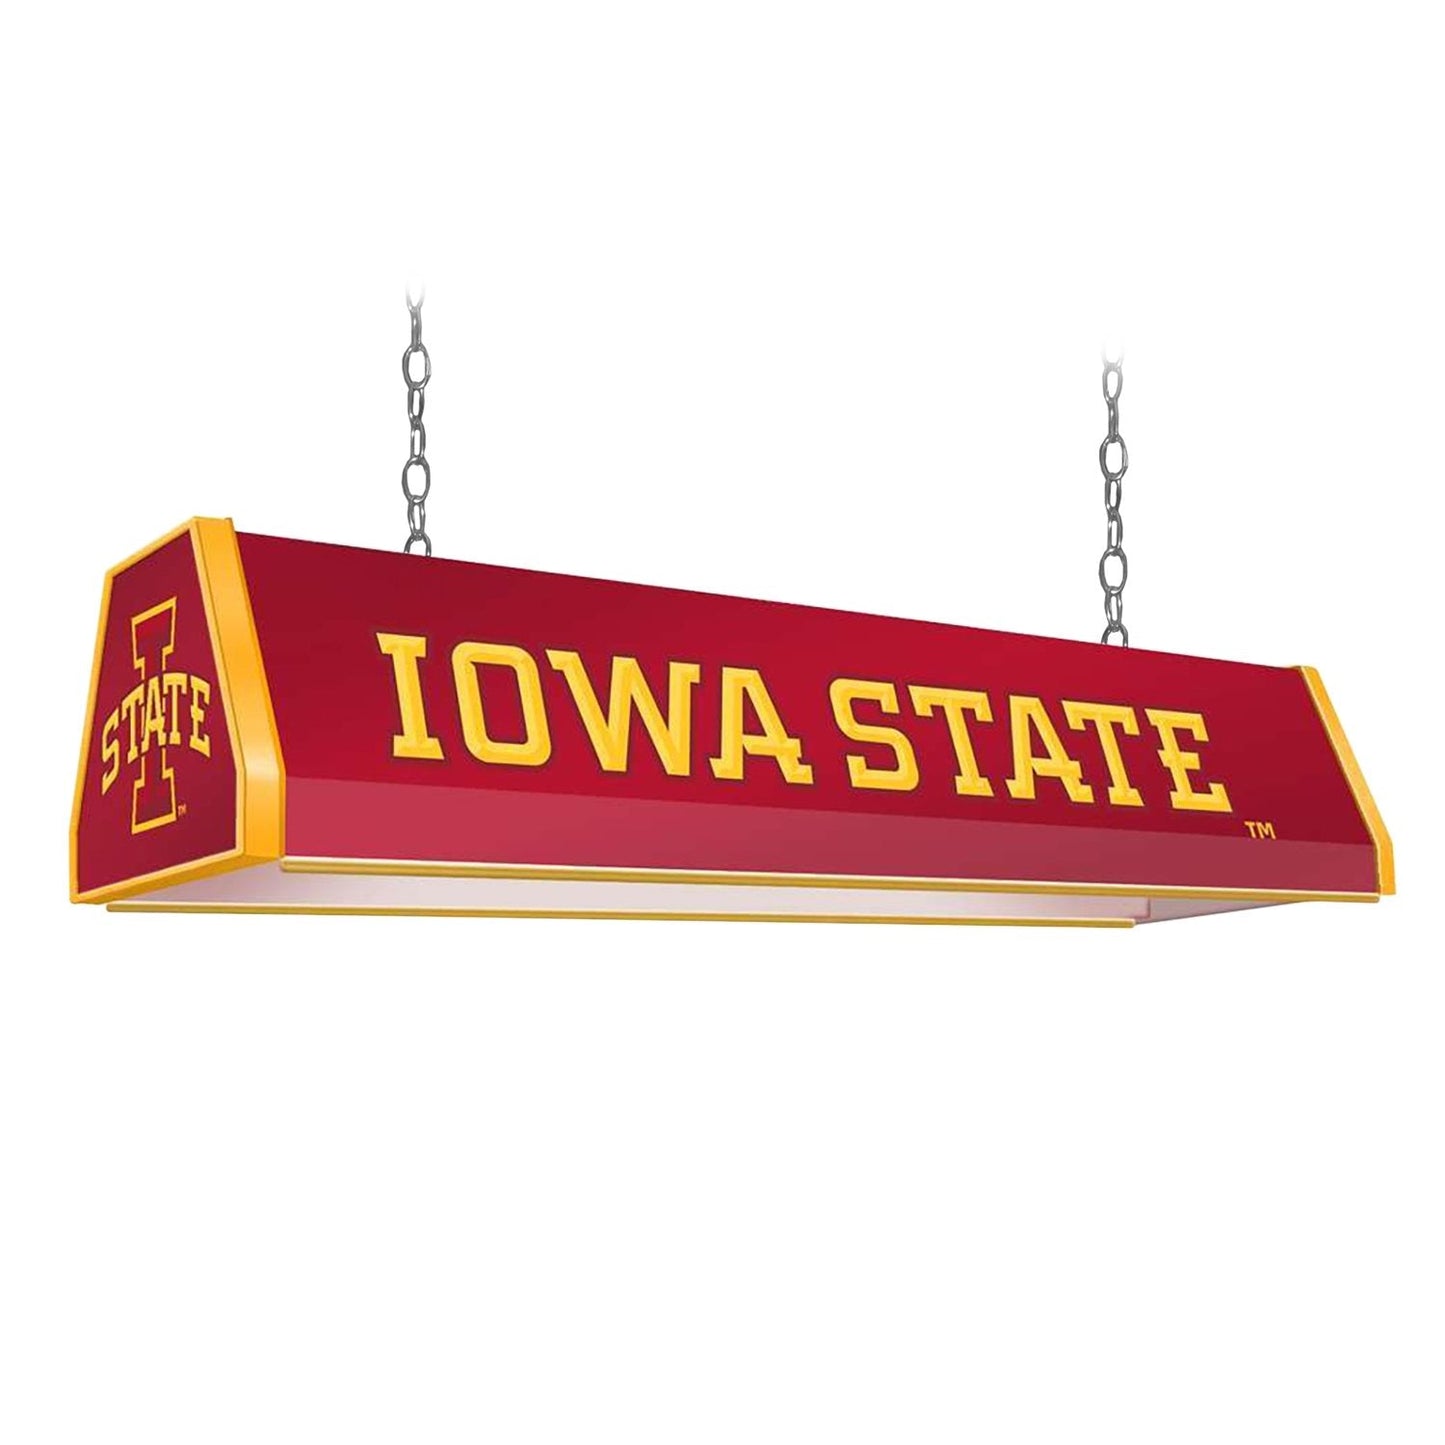 Iowa State Cyclones: Standard Pool Table Light - The Fan-Brand